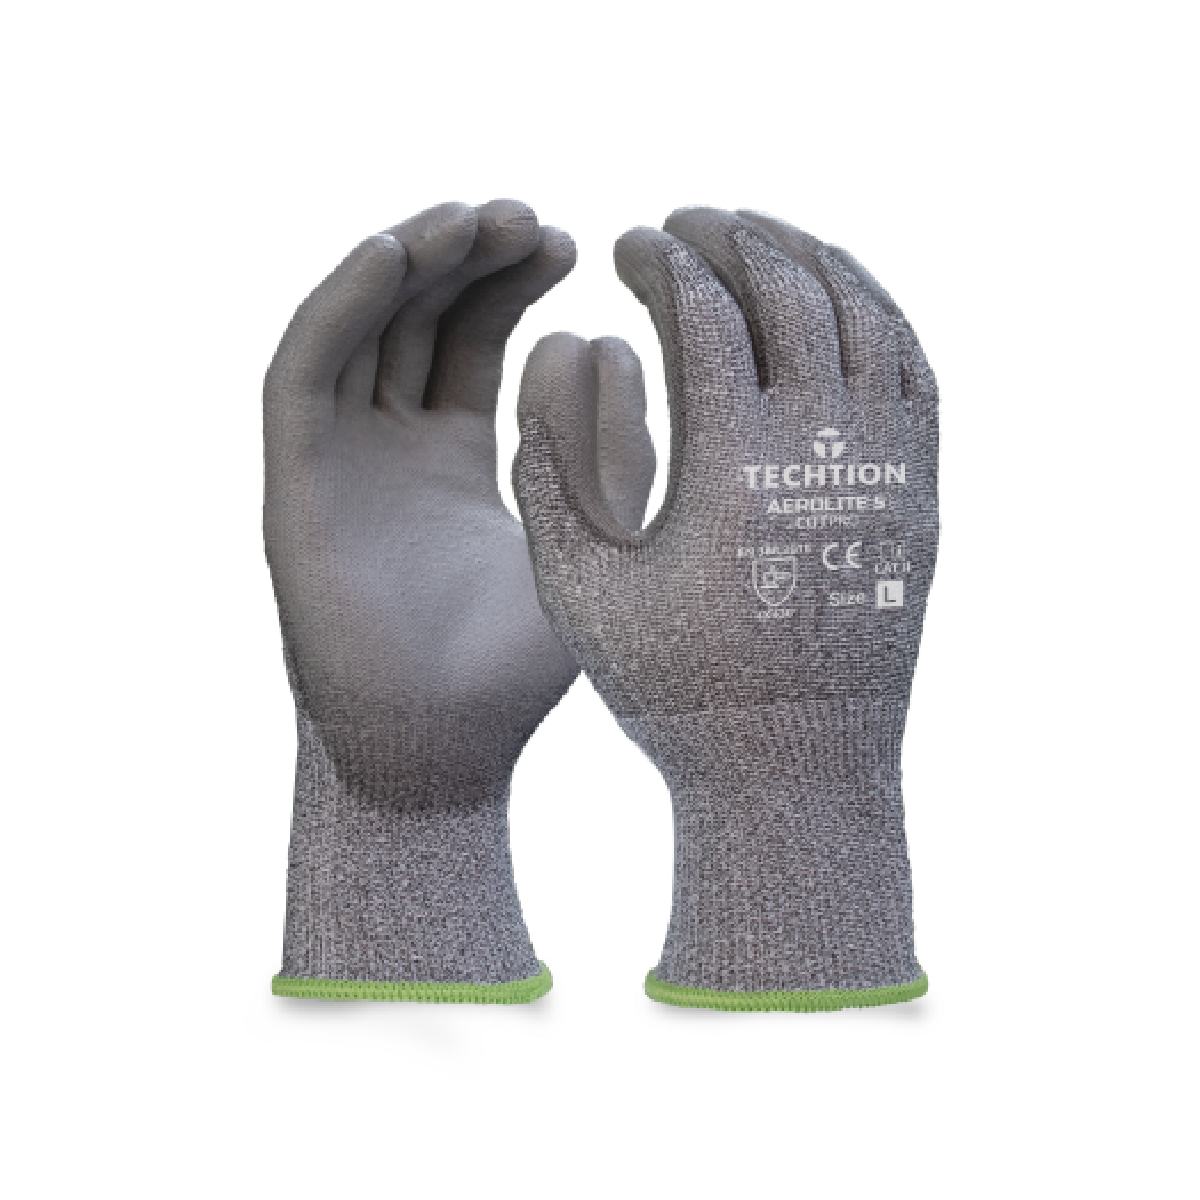 Techtion® Aerolite 5 Cutpro, Hand Protection